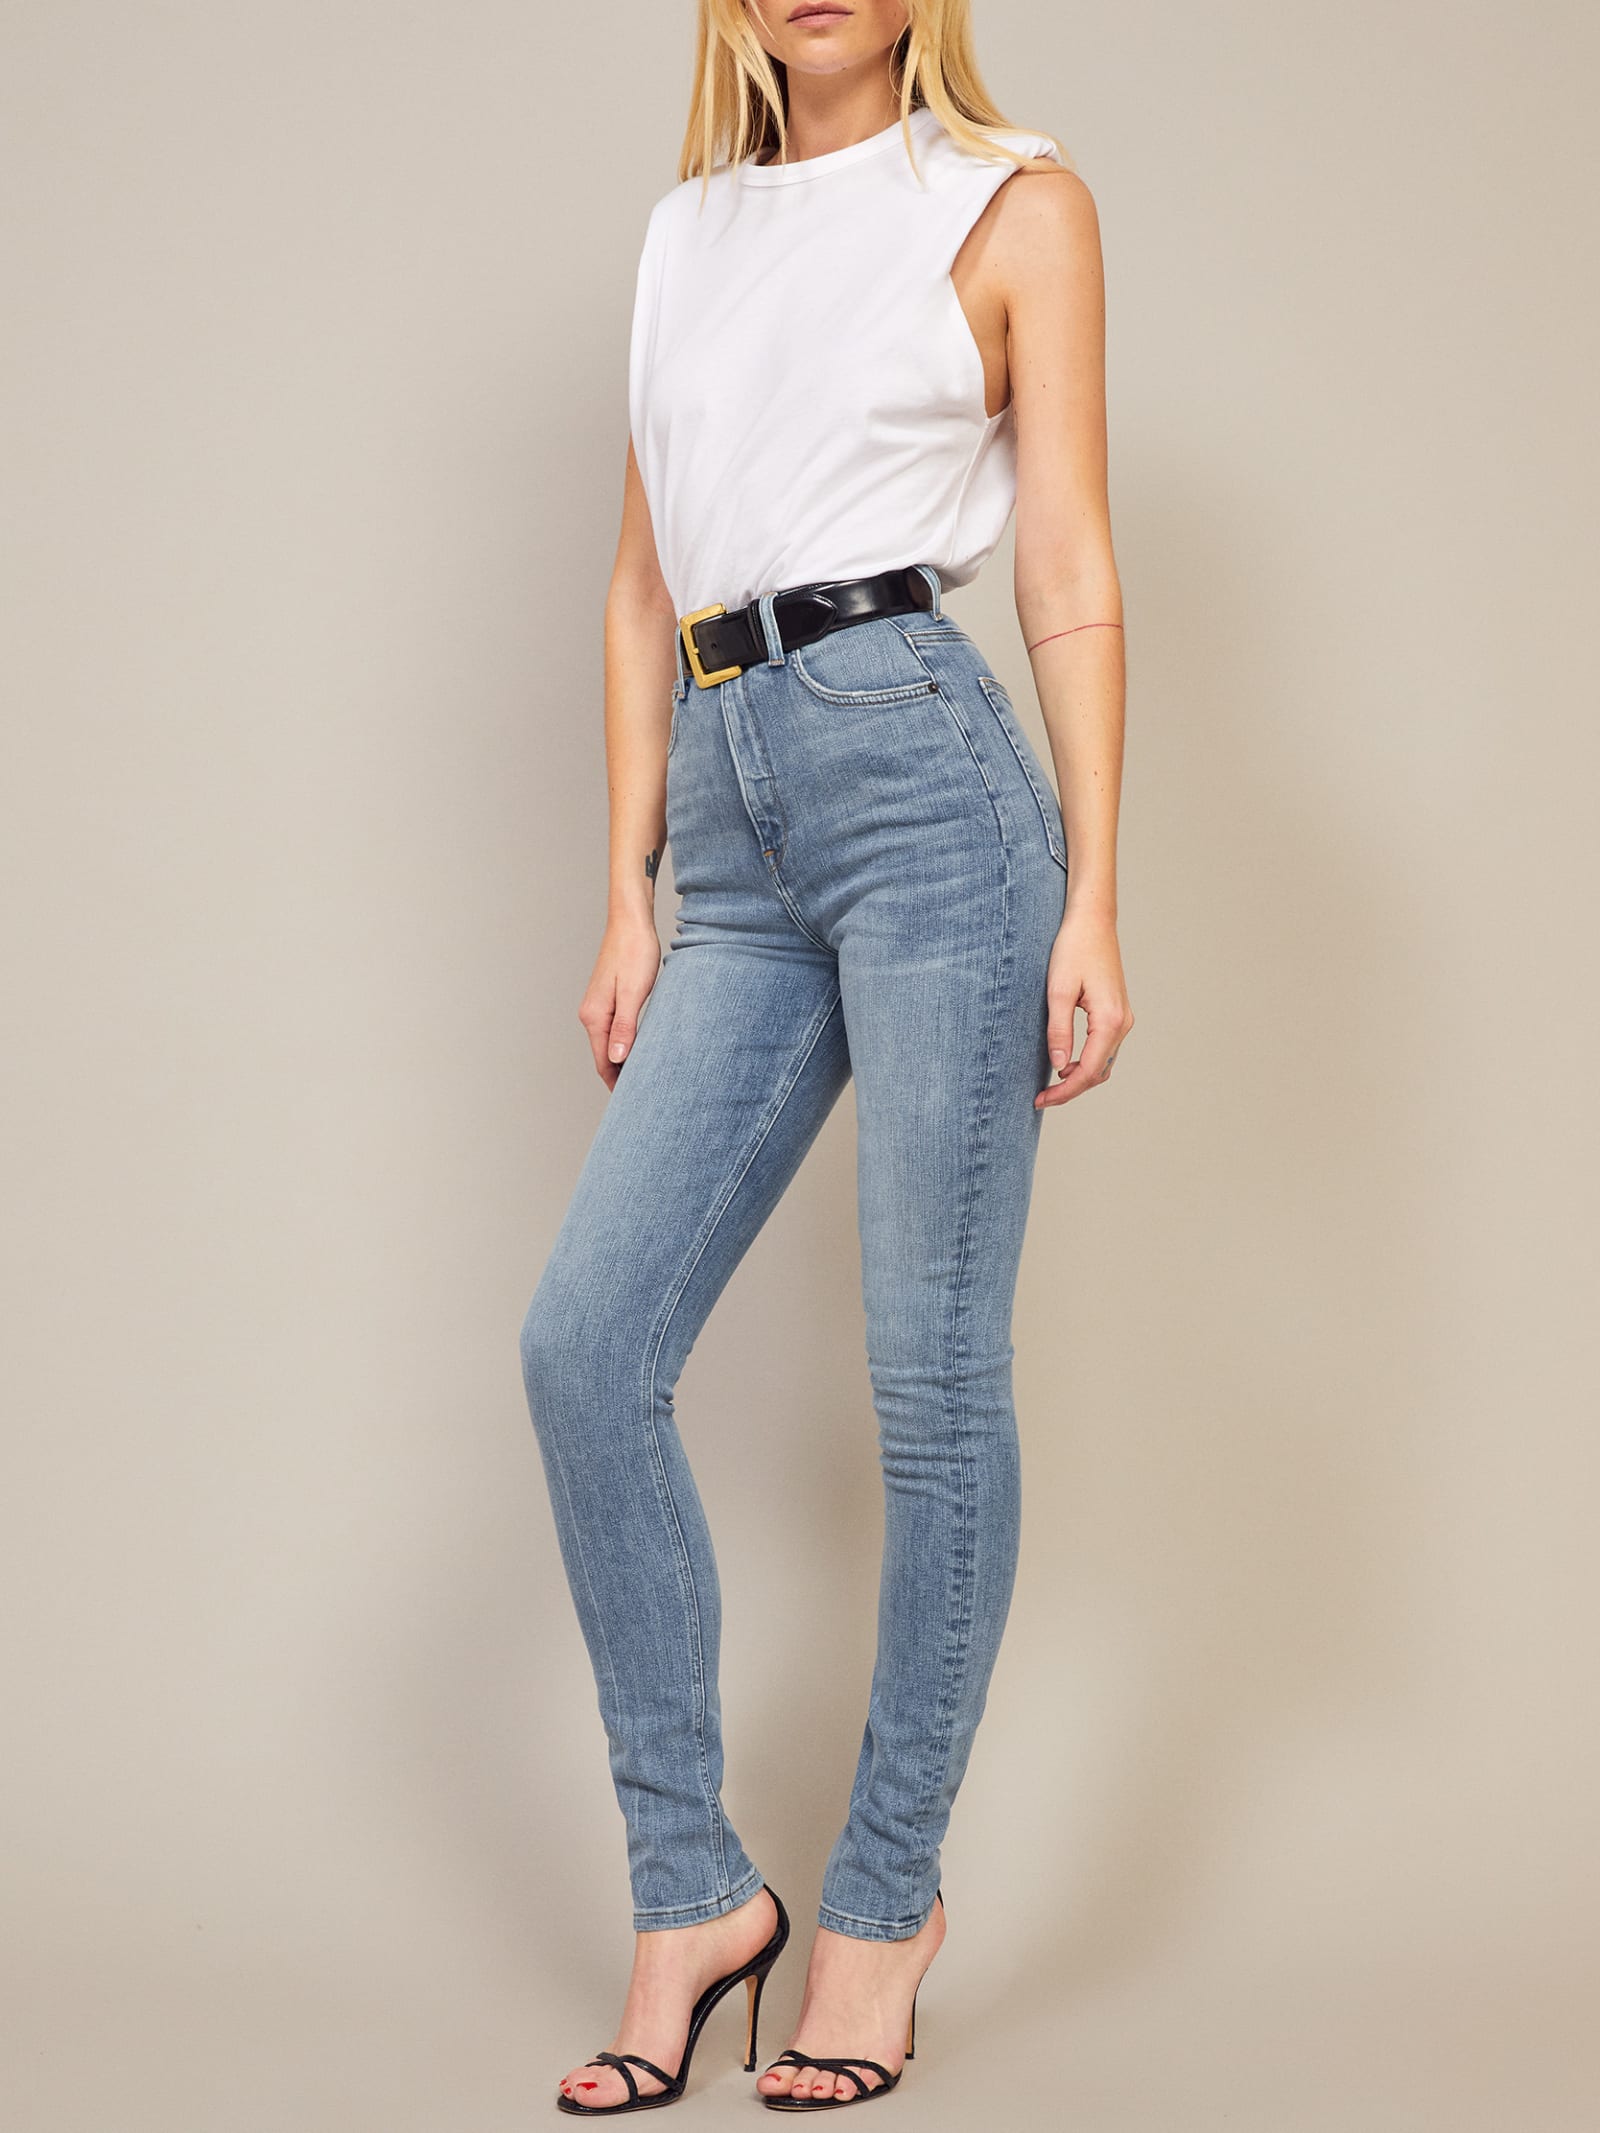 Brand Women's Skinny High Waist Jeans find